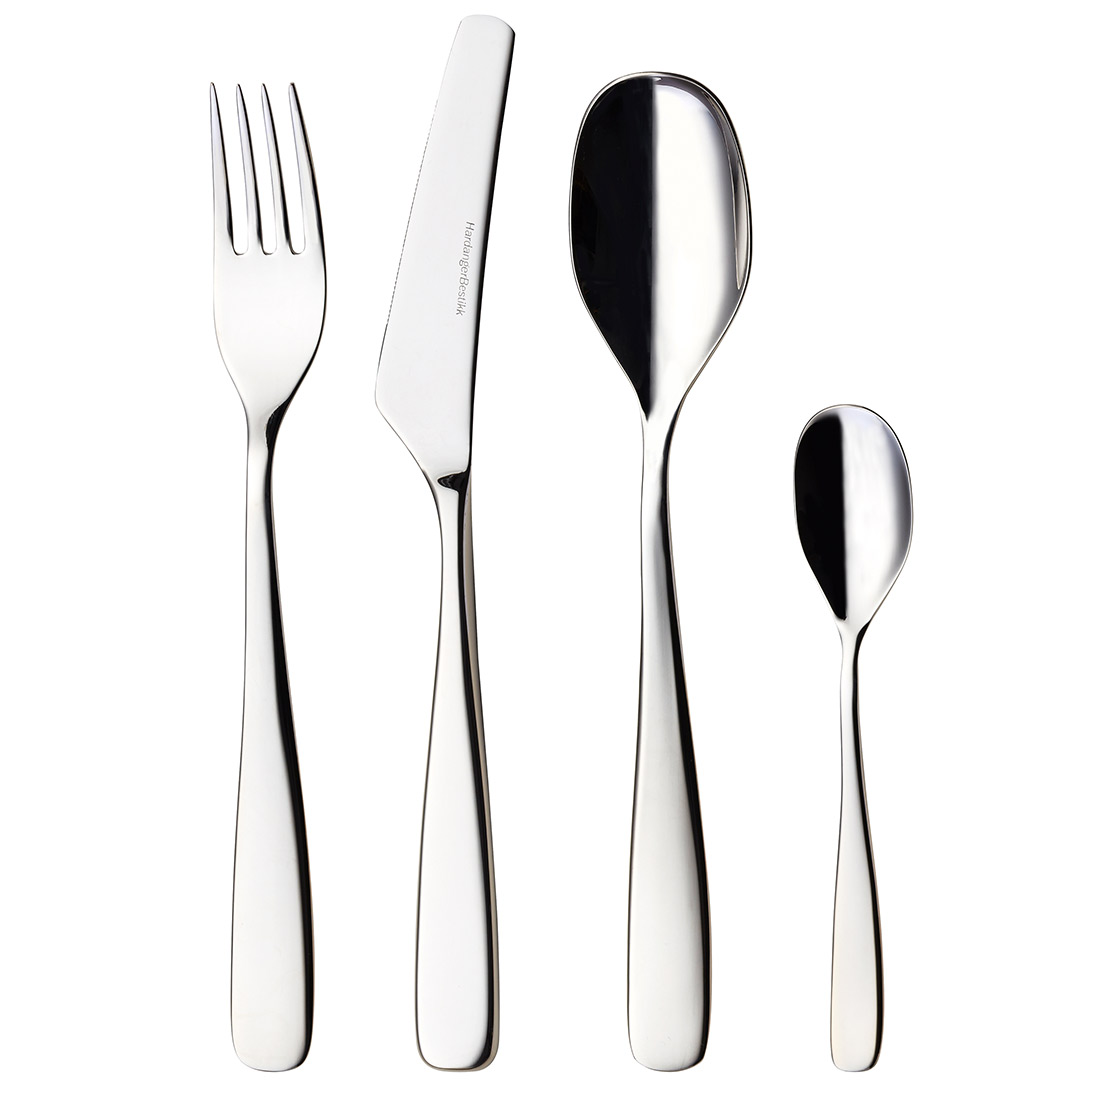 Tuva cutlery set product image